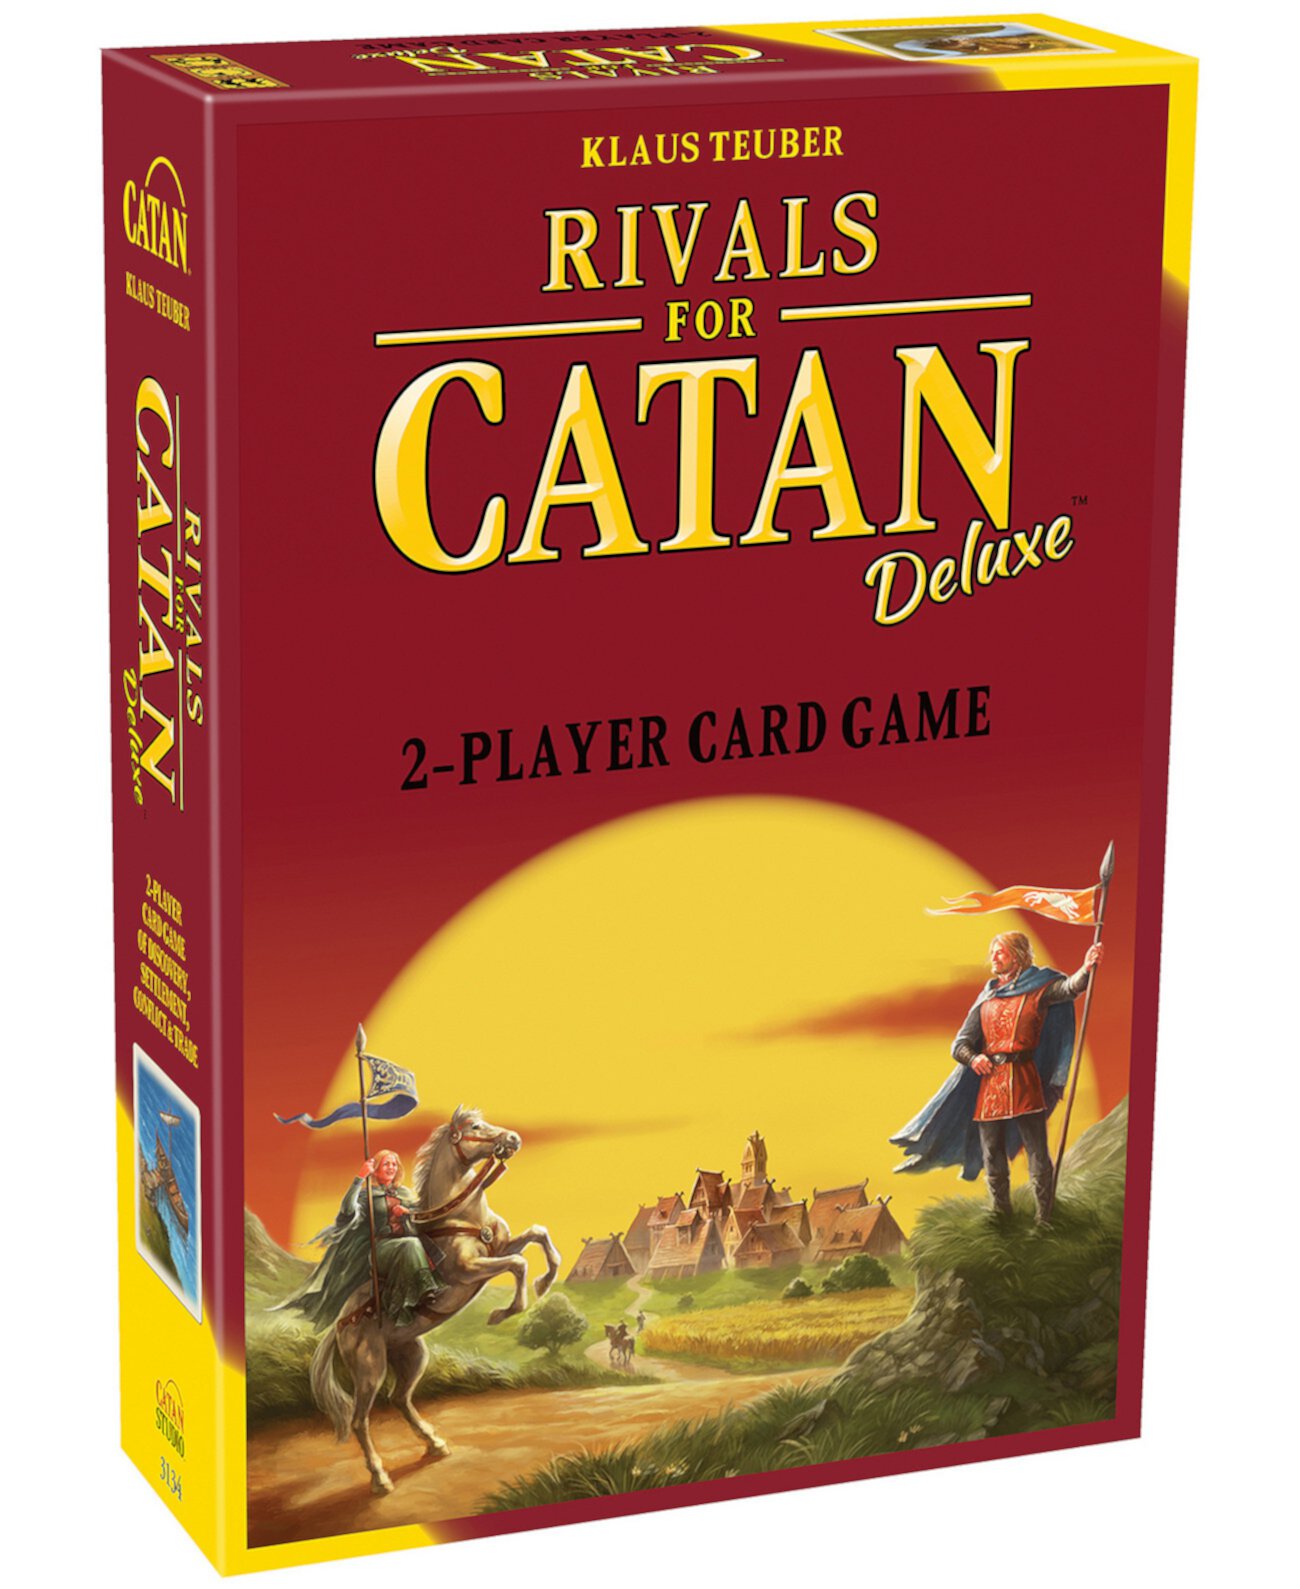 Studio Rivals for Catan Deluxe - Набор карточных игр для 2 игроков, 198 предметов Catan